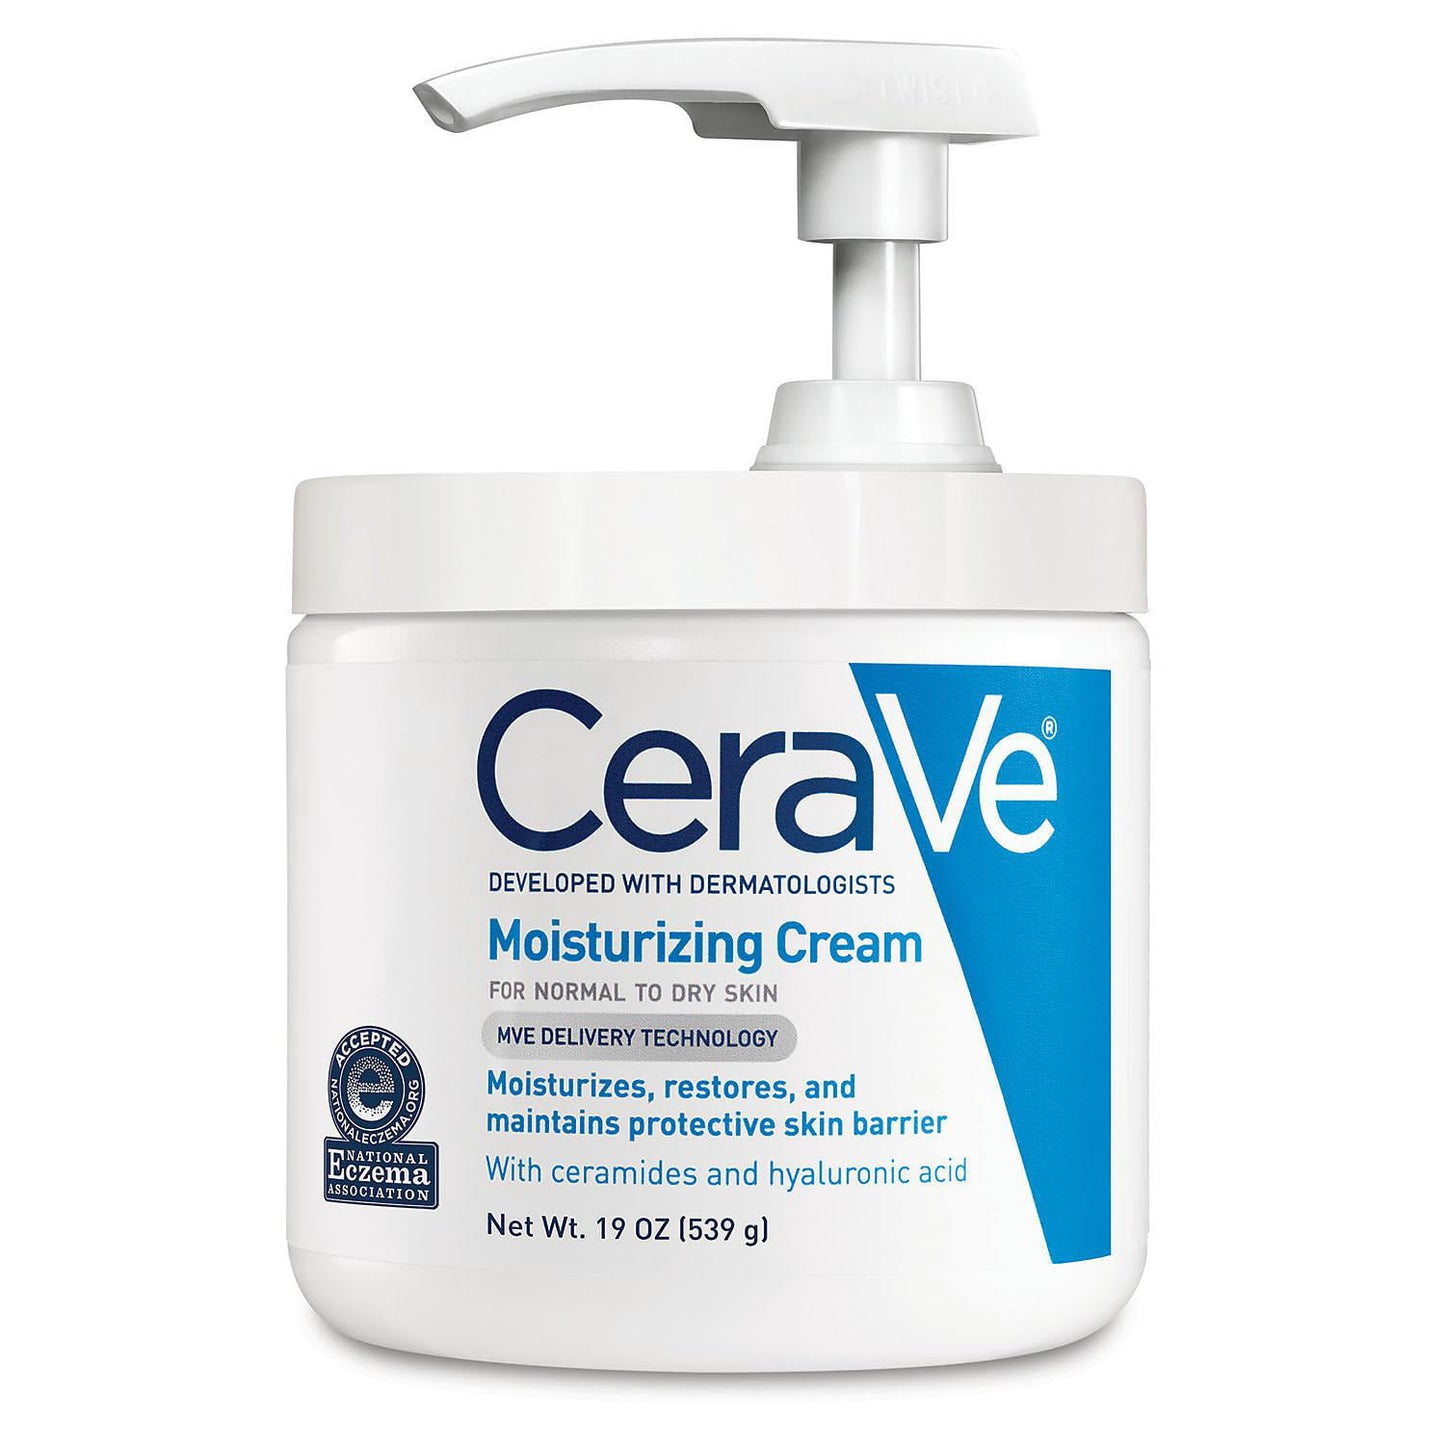 The CeraVe Moisturizing Cream with Pump (19 oz.)